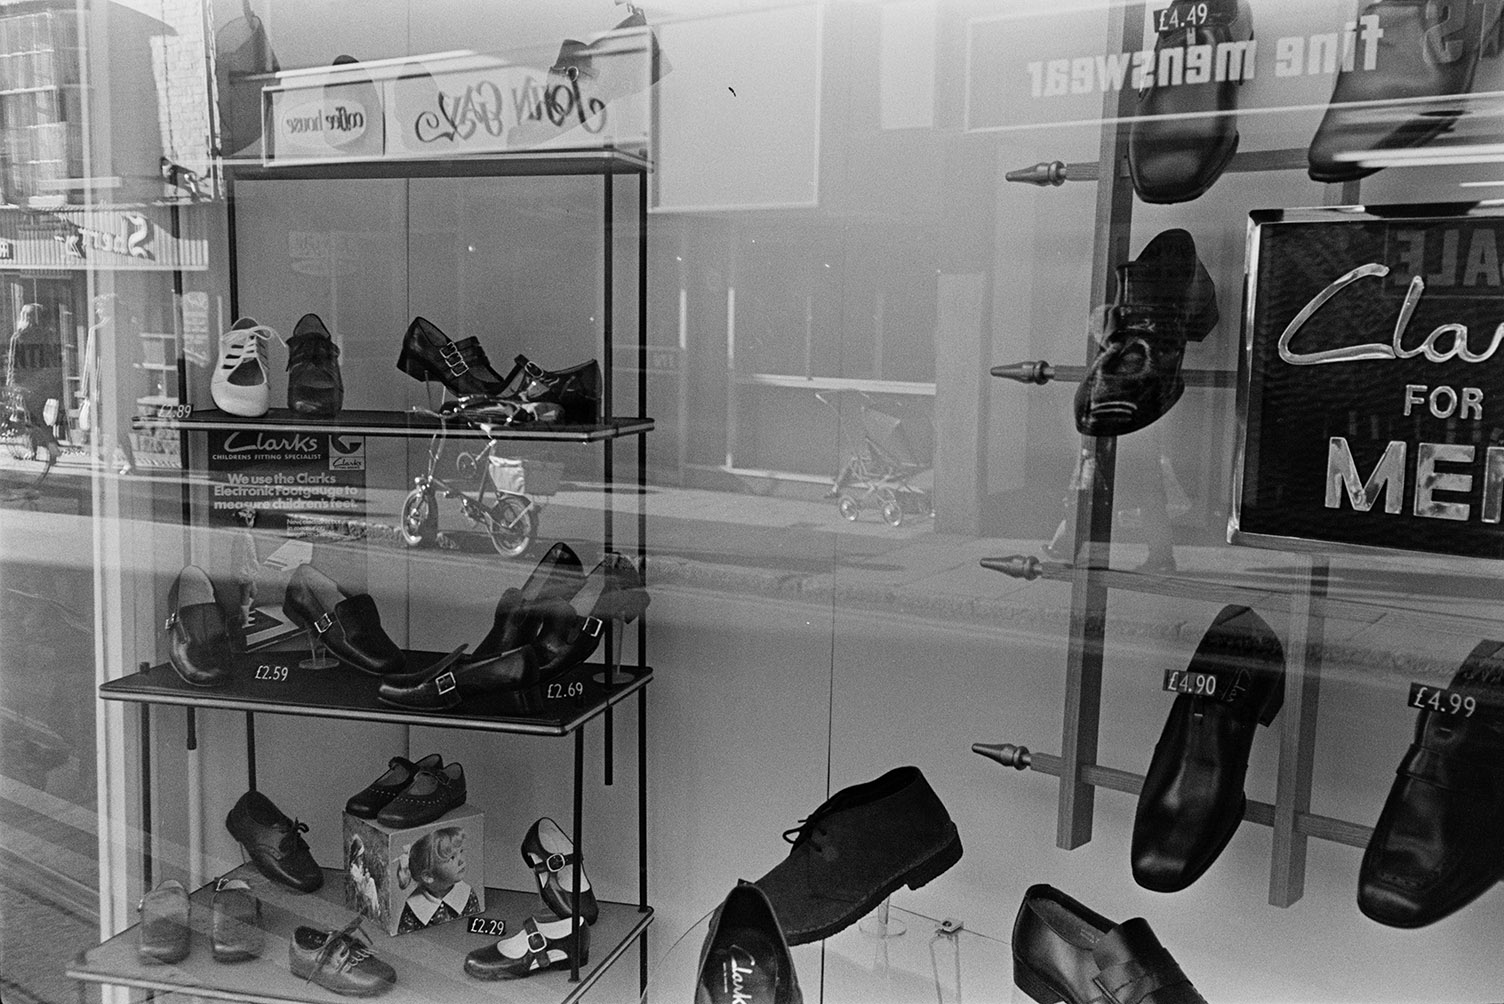 Clarks shoe shop front window display in Barnstaple. Men's, women's and children's shoes are on display.